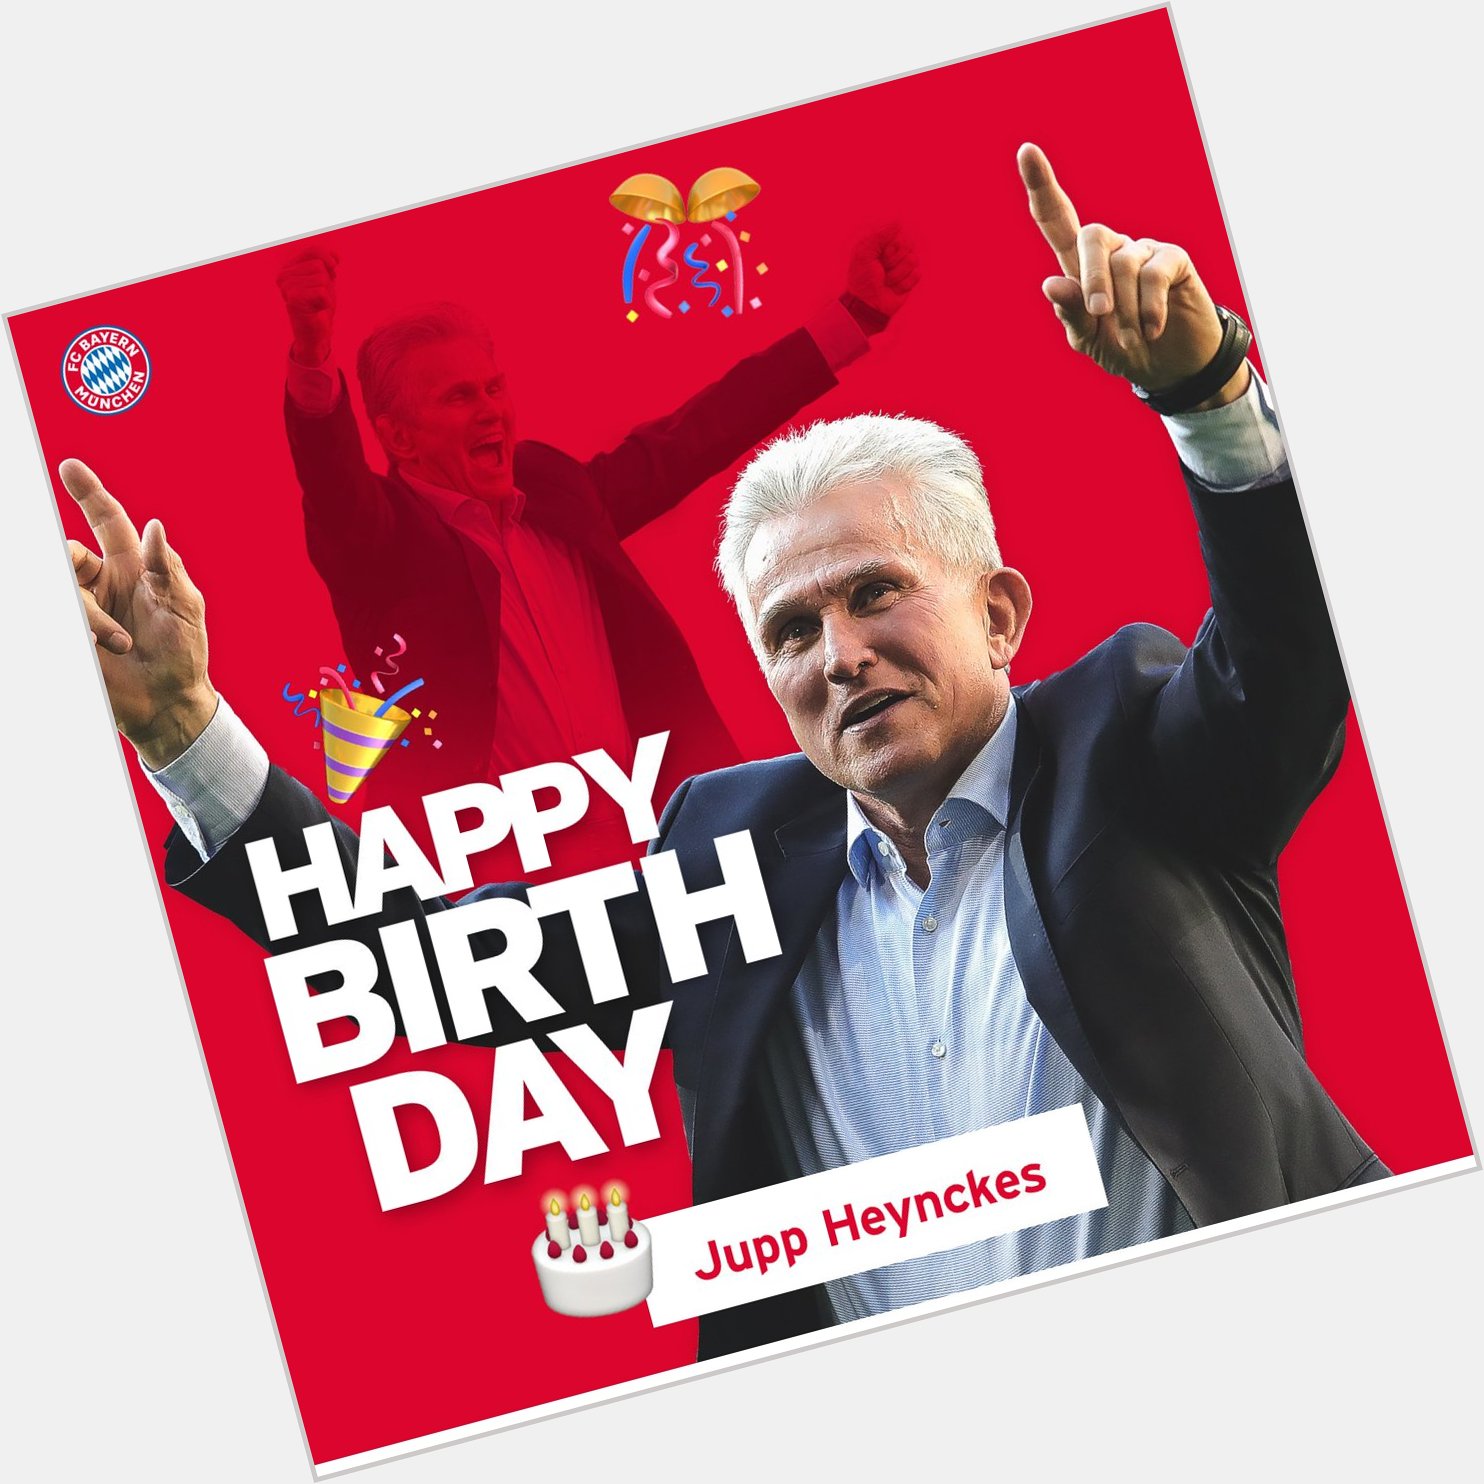 Happy 73rd Birthday, Jupp Heynckes! 